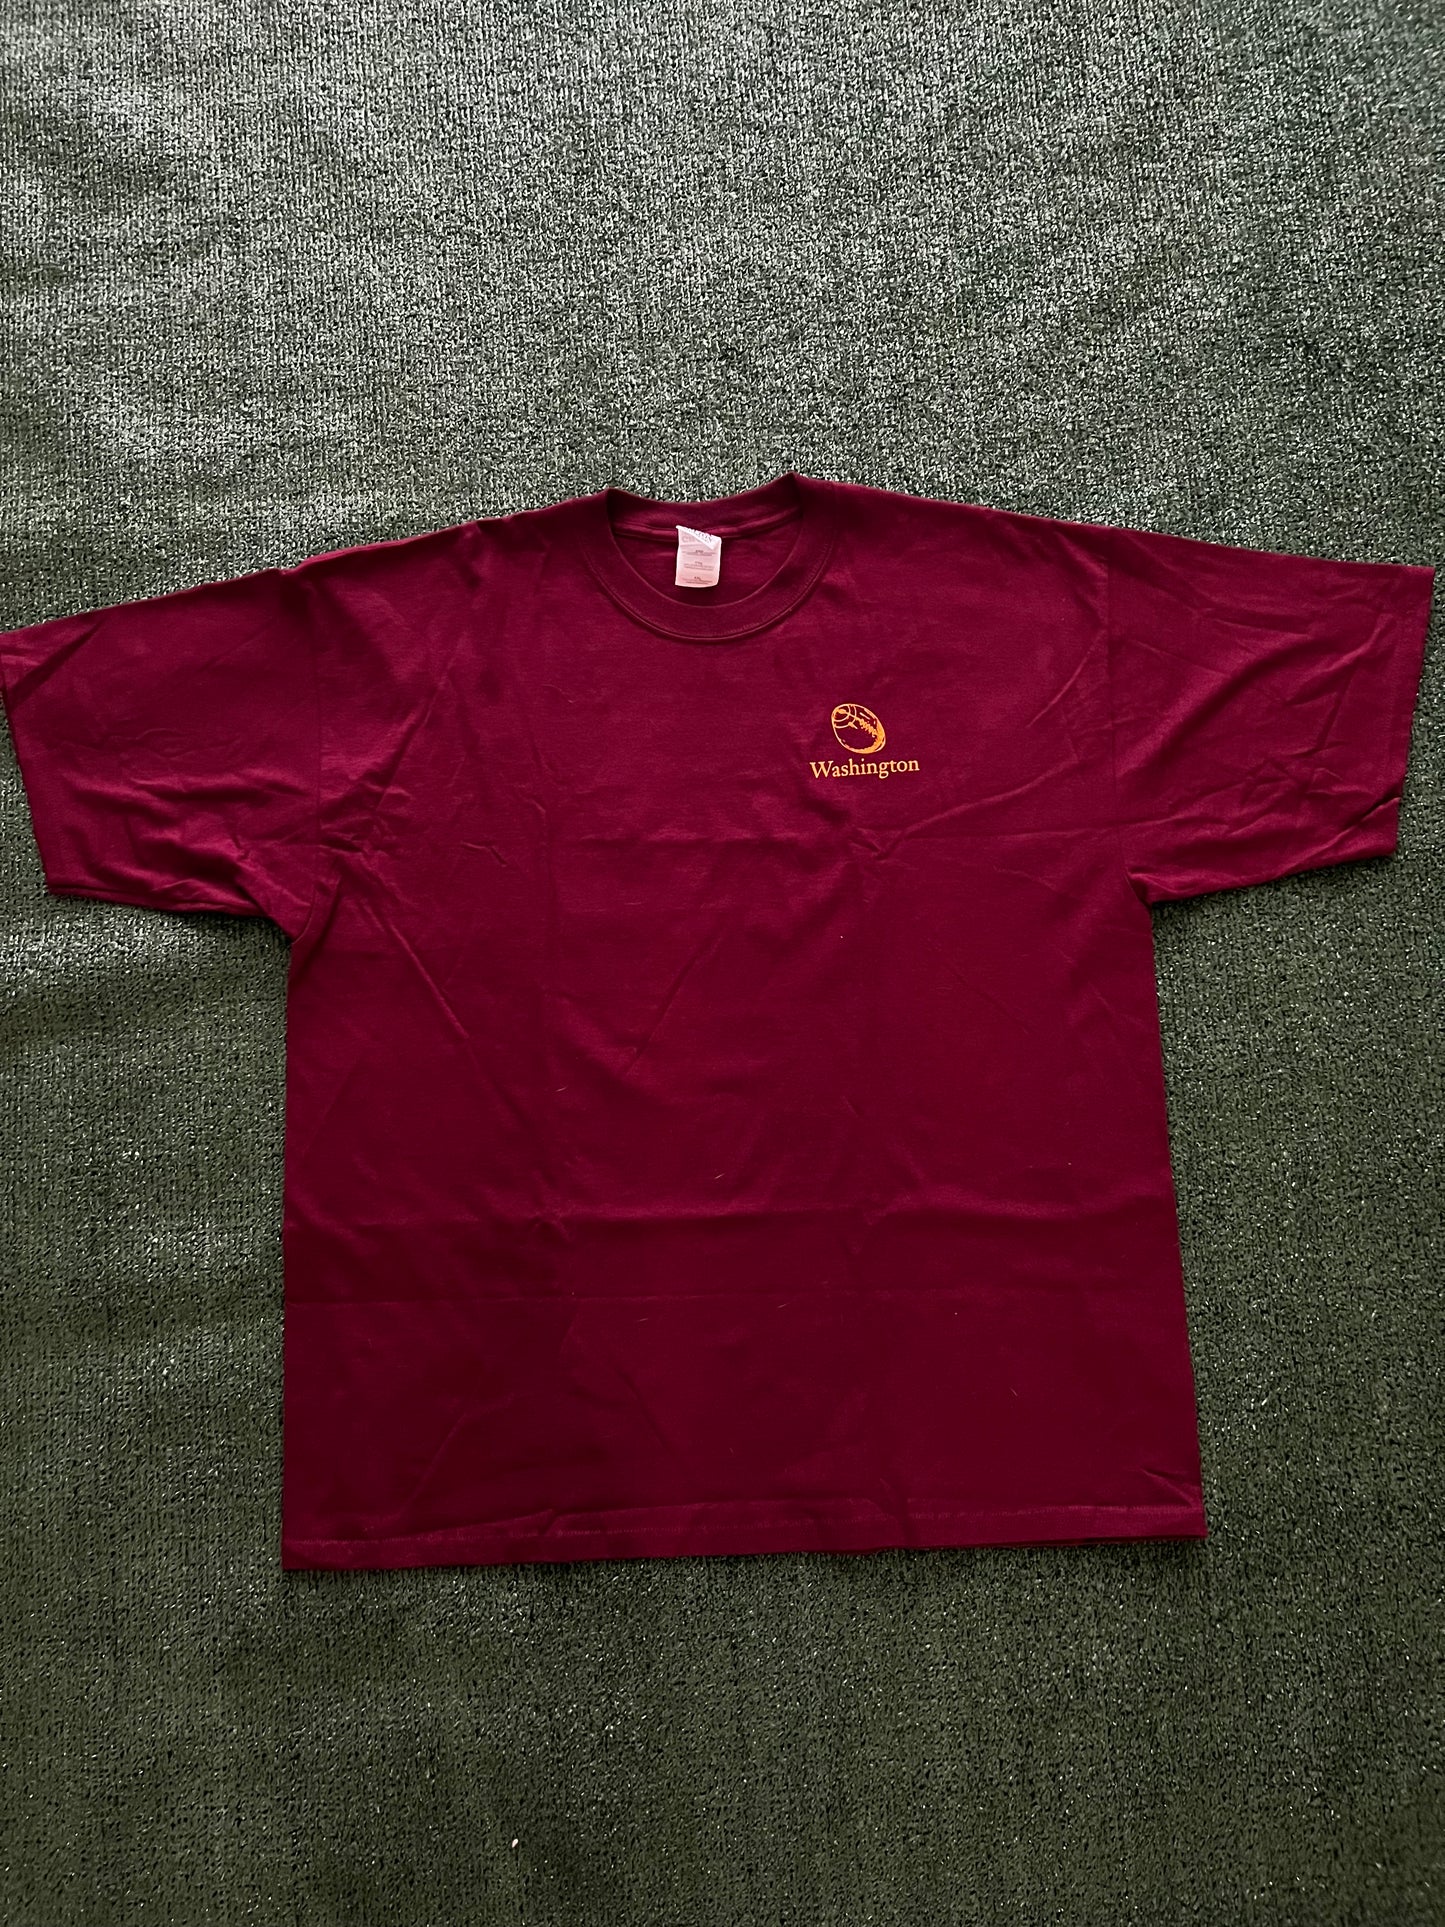 Washington Redskins Short Sleeve T Shirt (XXL)